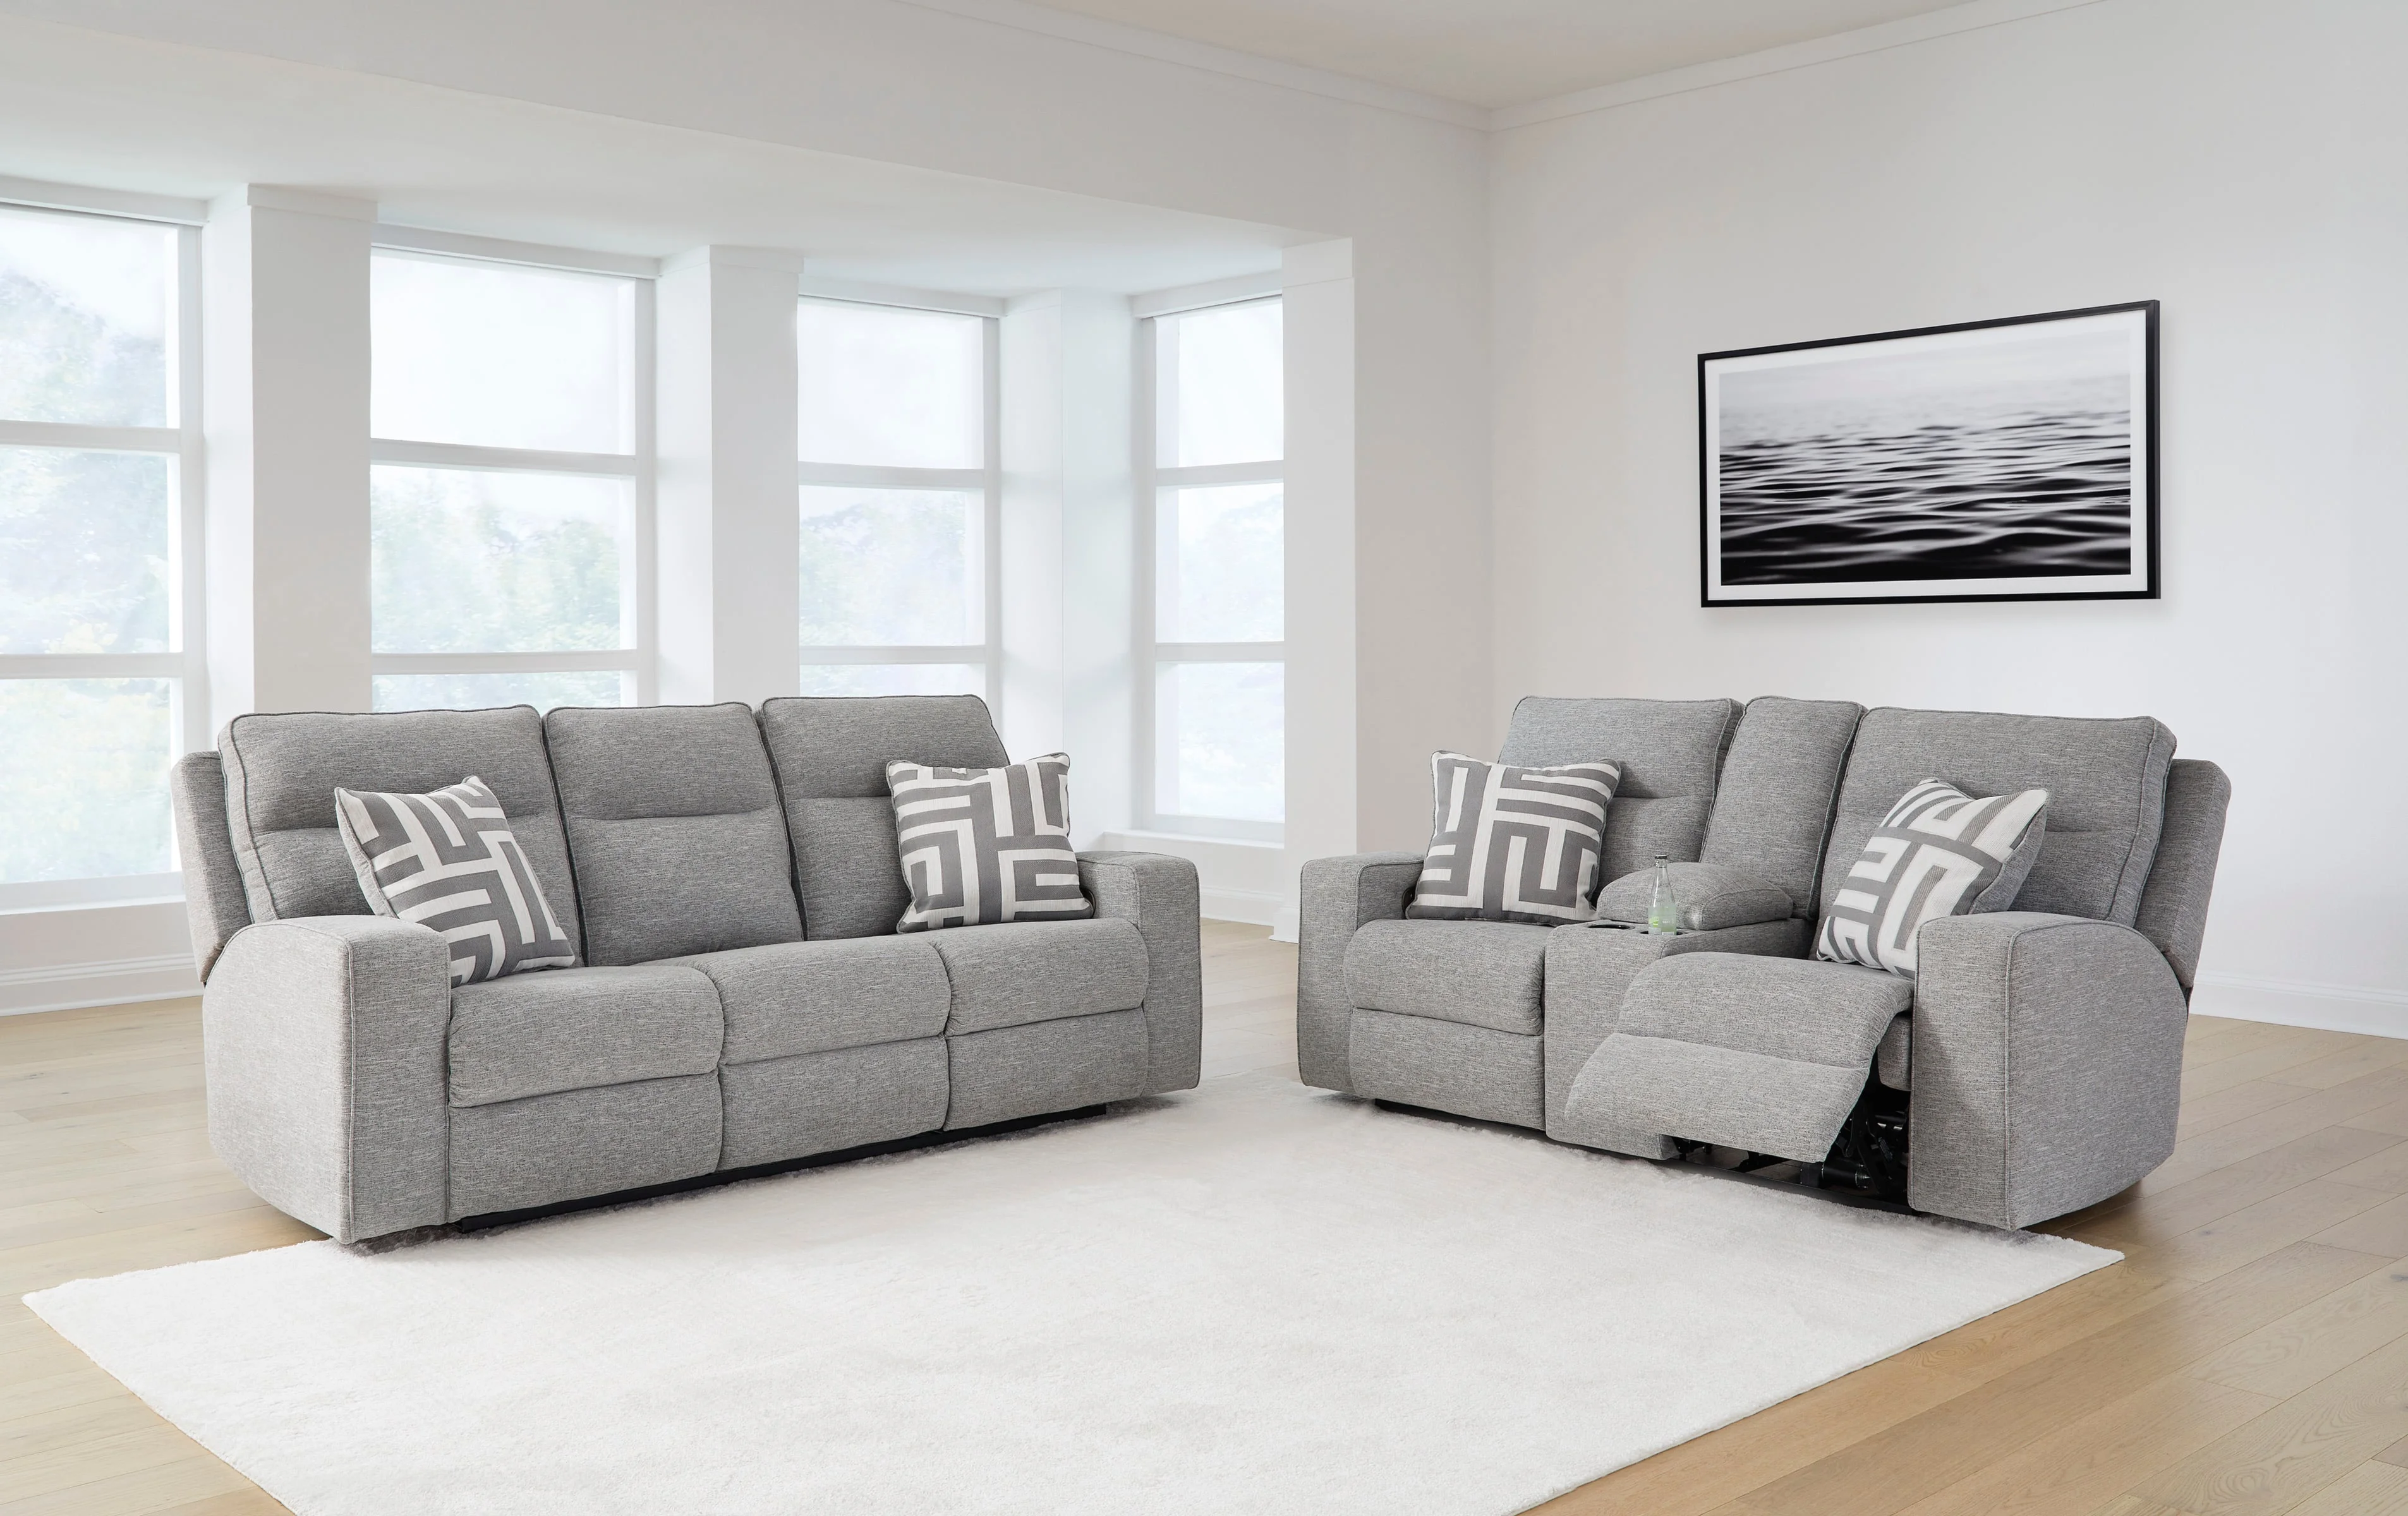 Biscoe 9050318x1+9050315x1 Living Room Set | American Furniture ...